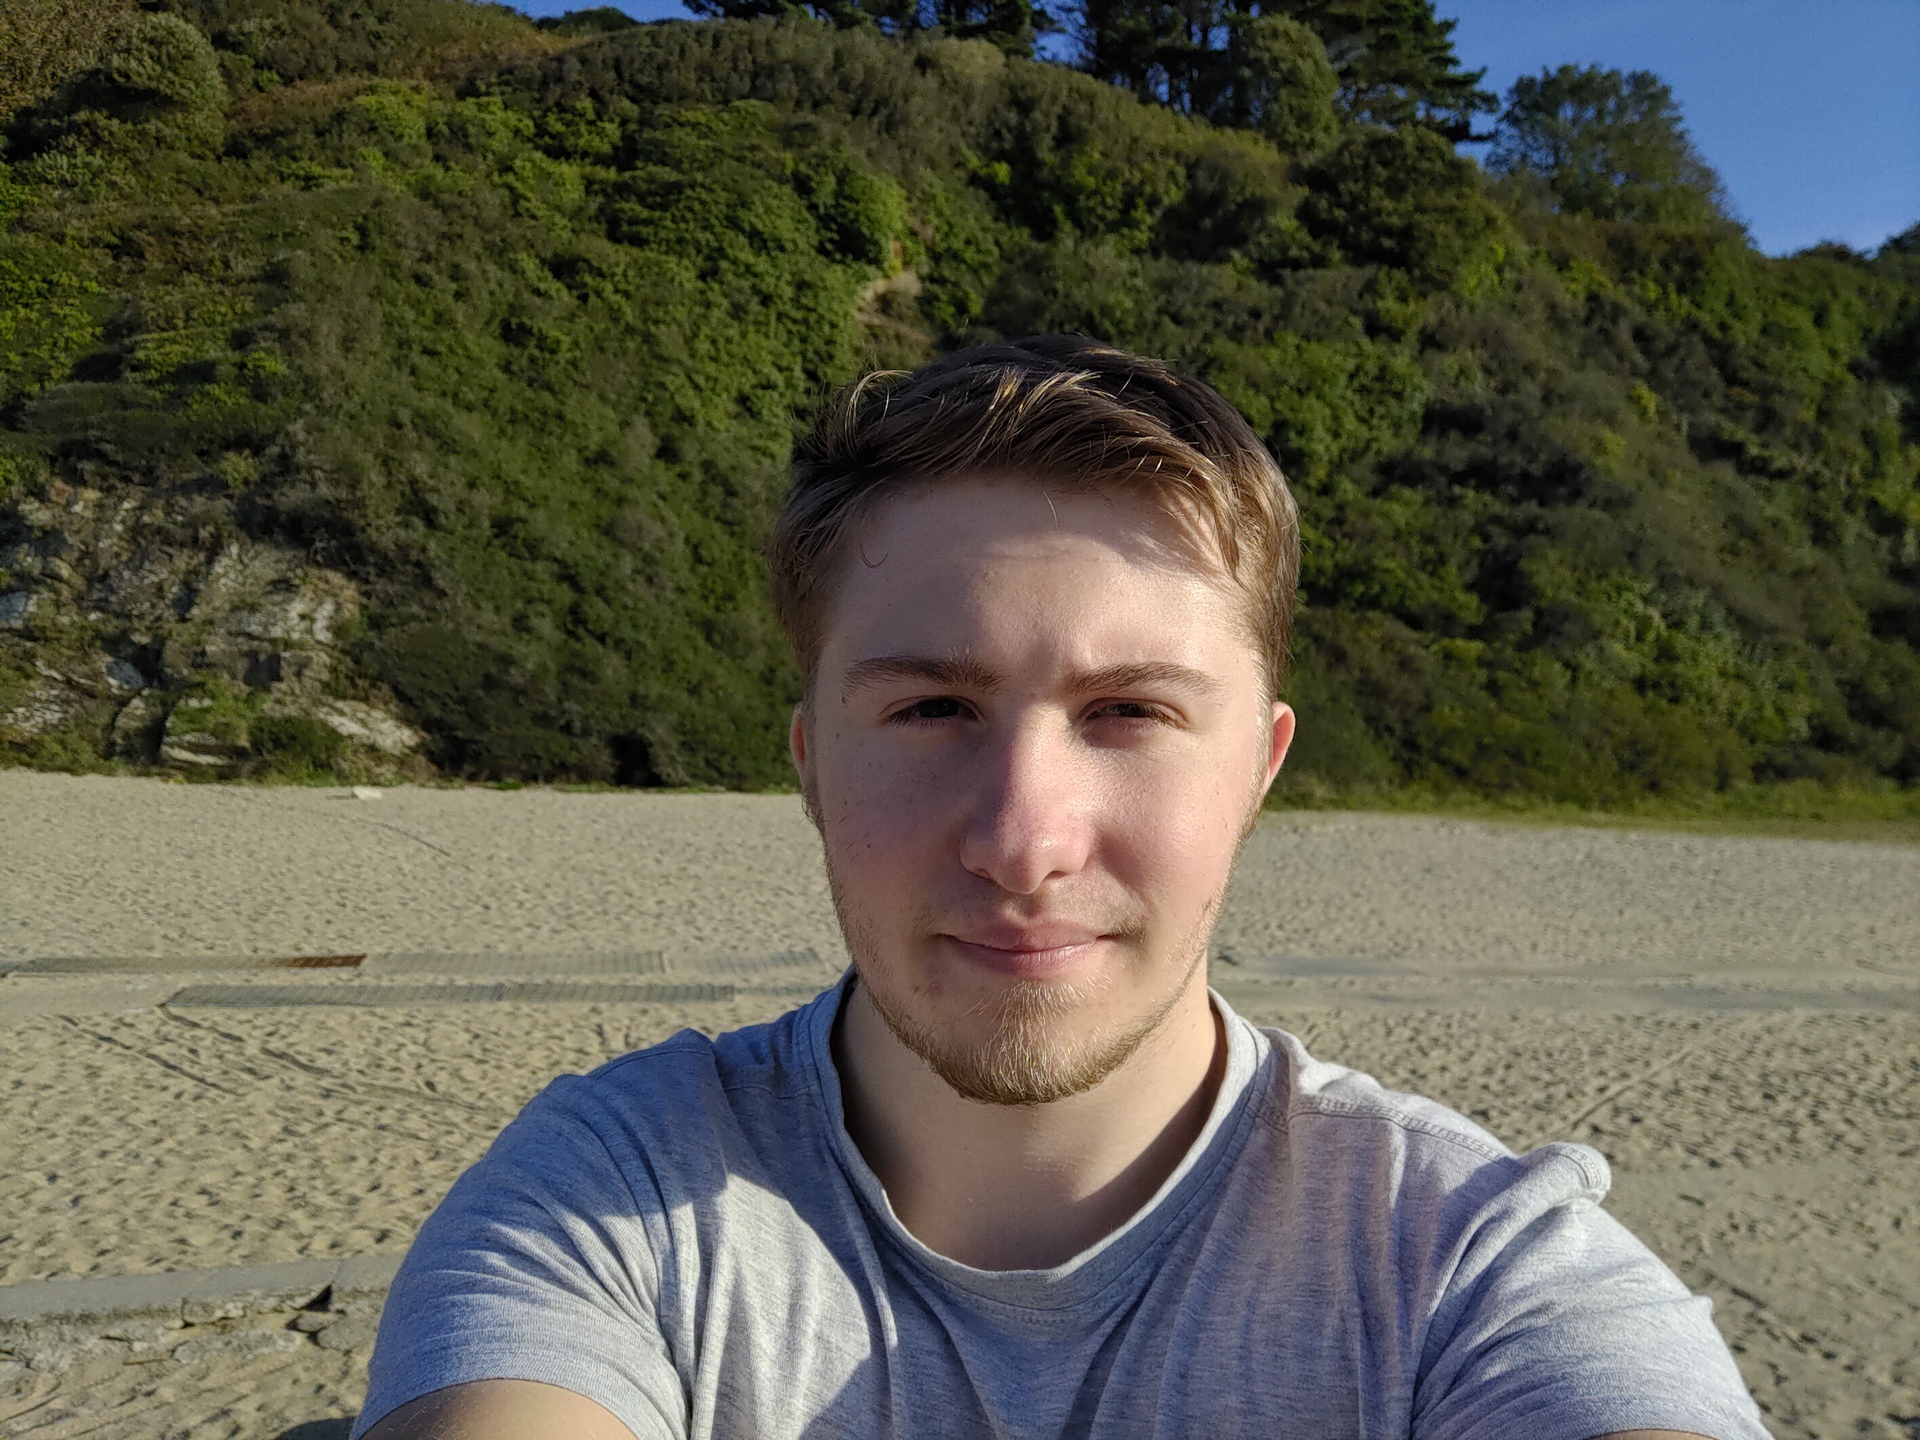 ROG Phone 2 Camera test Selfie in sunlight on beach